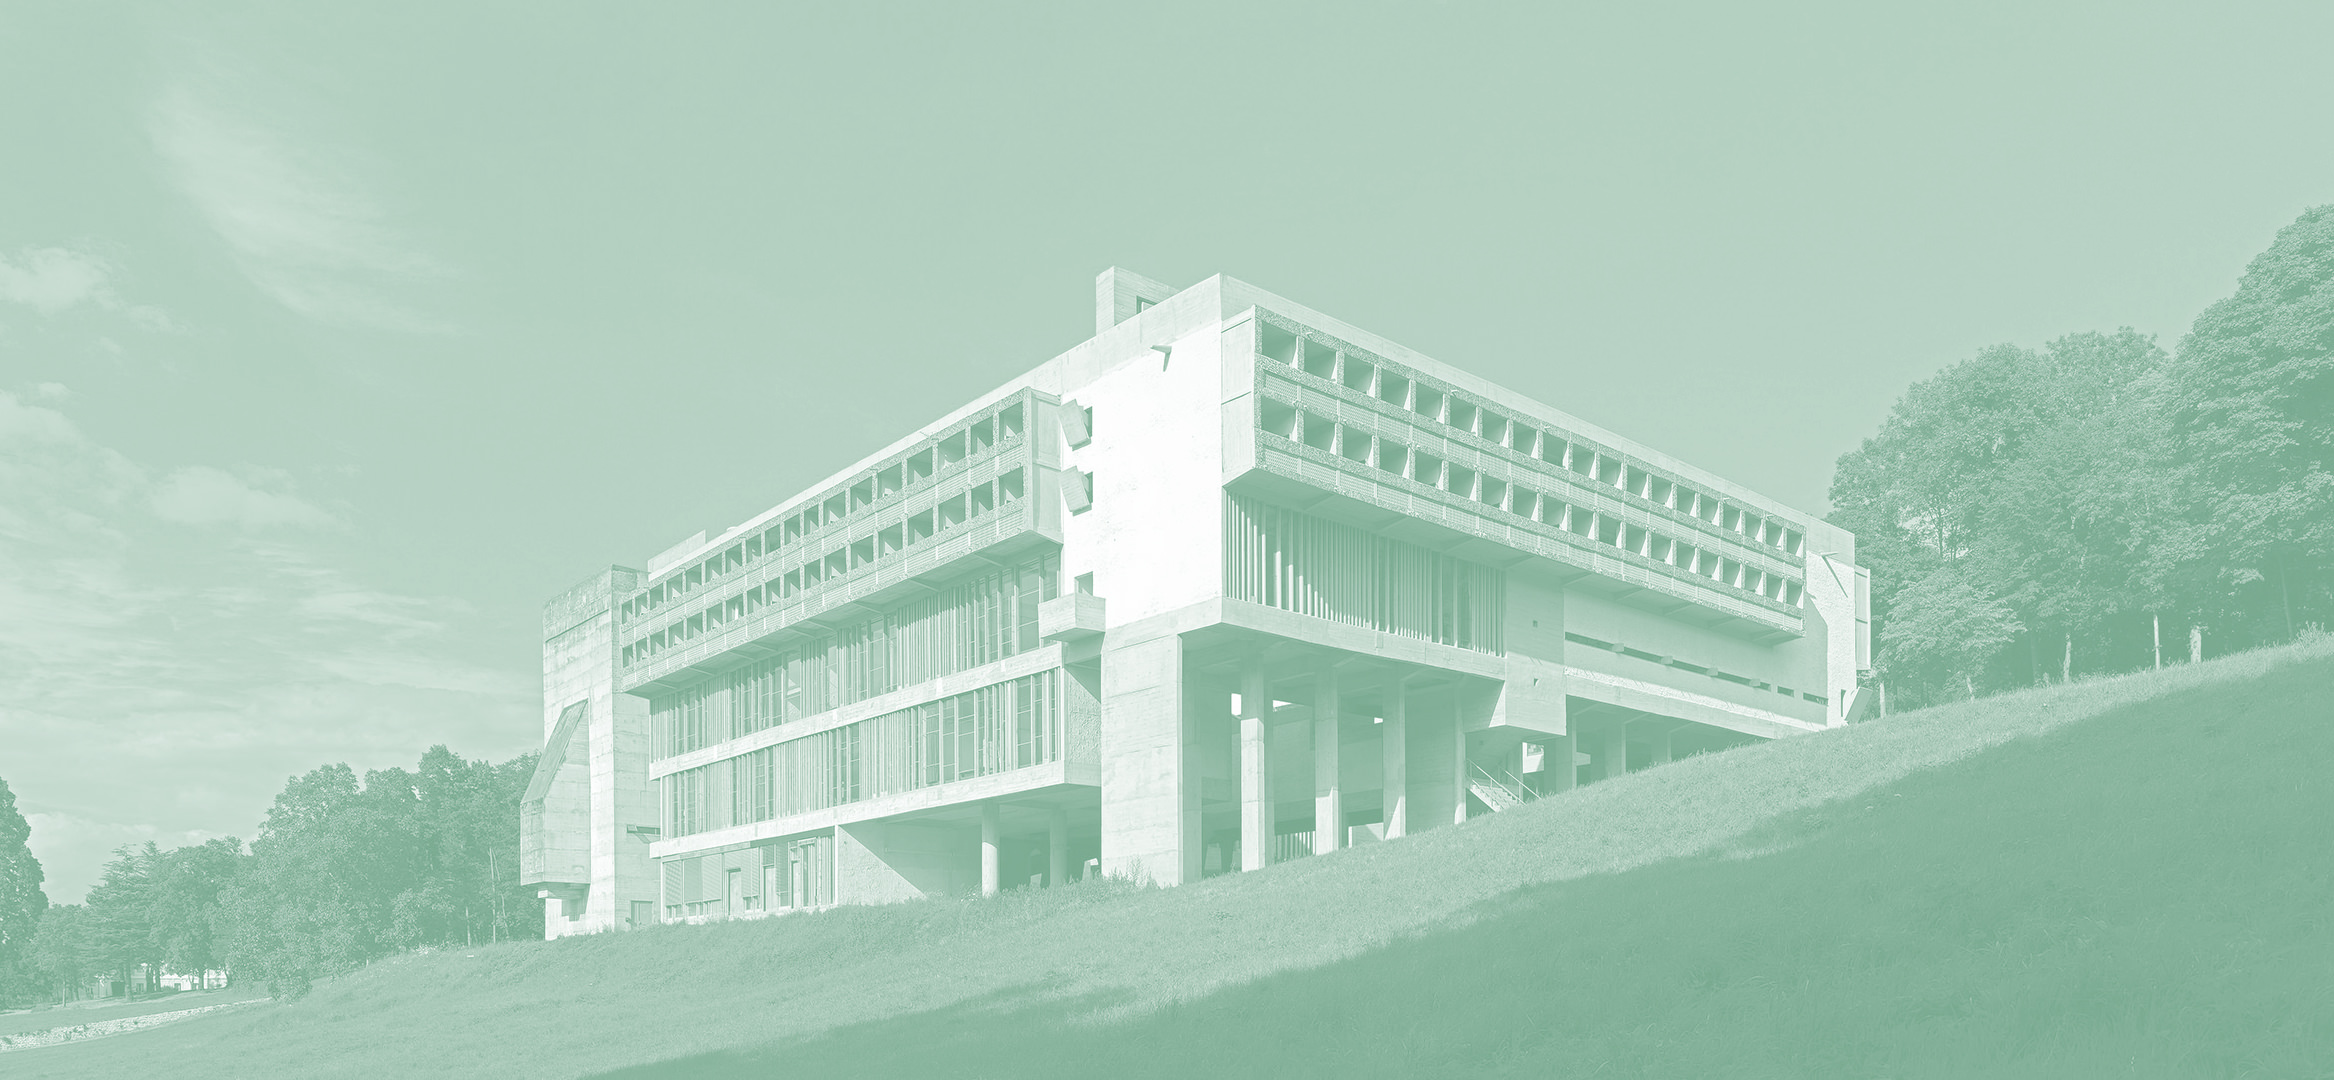 Le Corbusier: Between Modernity & Controversy